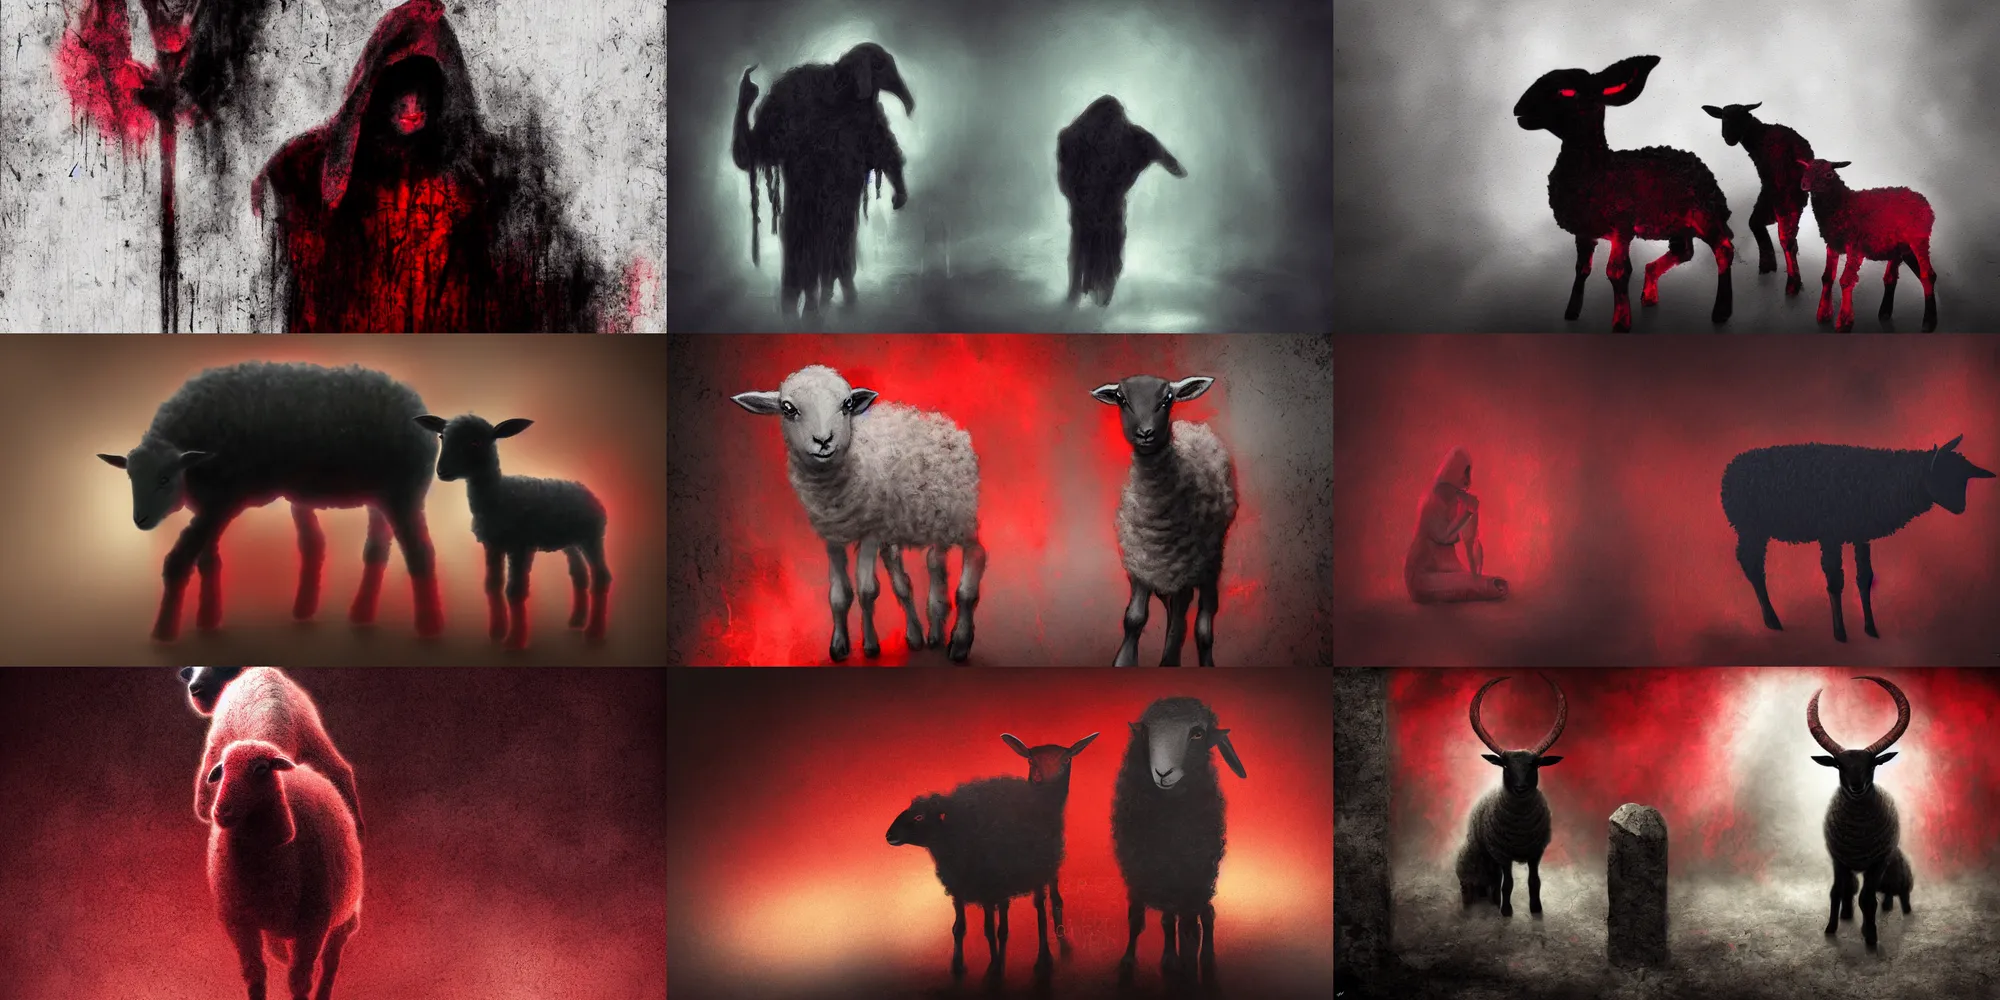 Prompt: lamb cultist, dark colors, colorful, reds and blacks, ambient glow, digital art